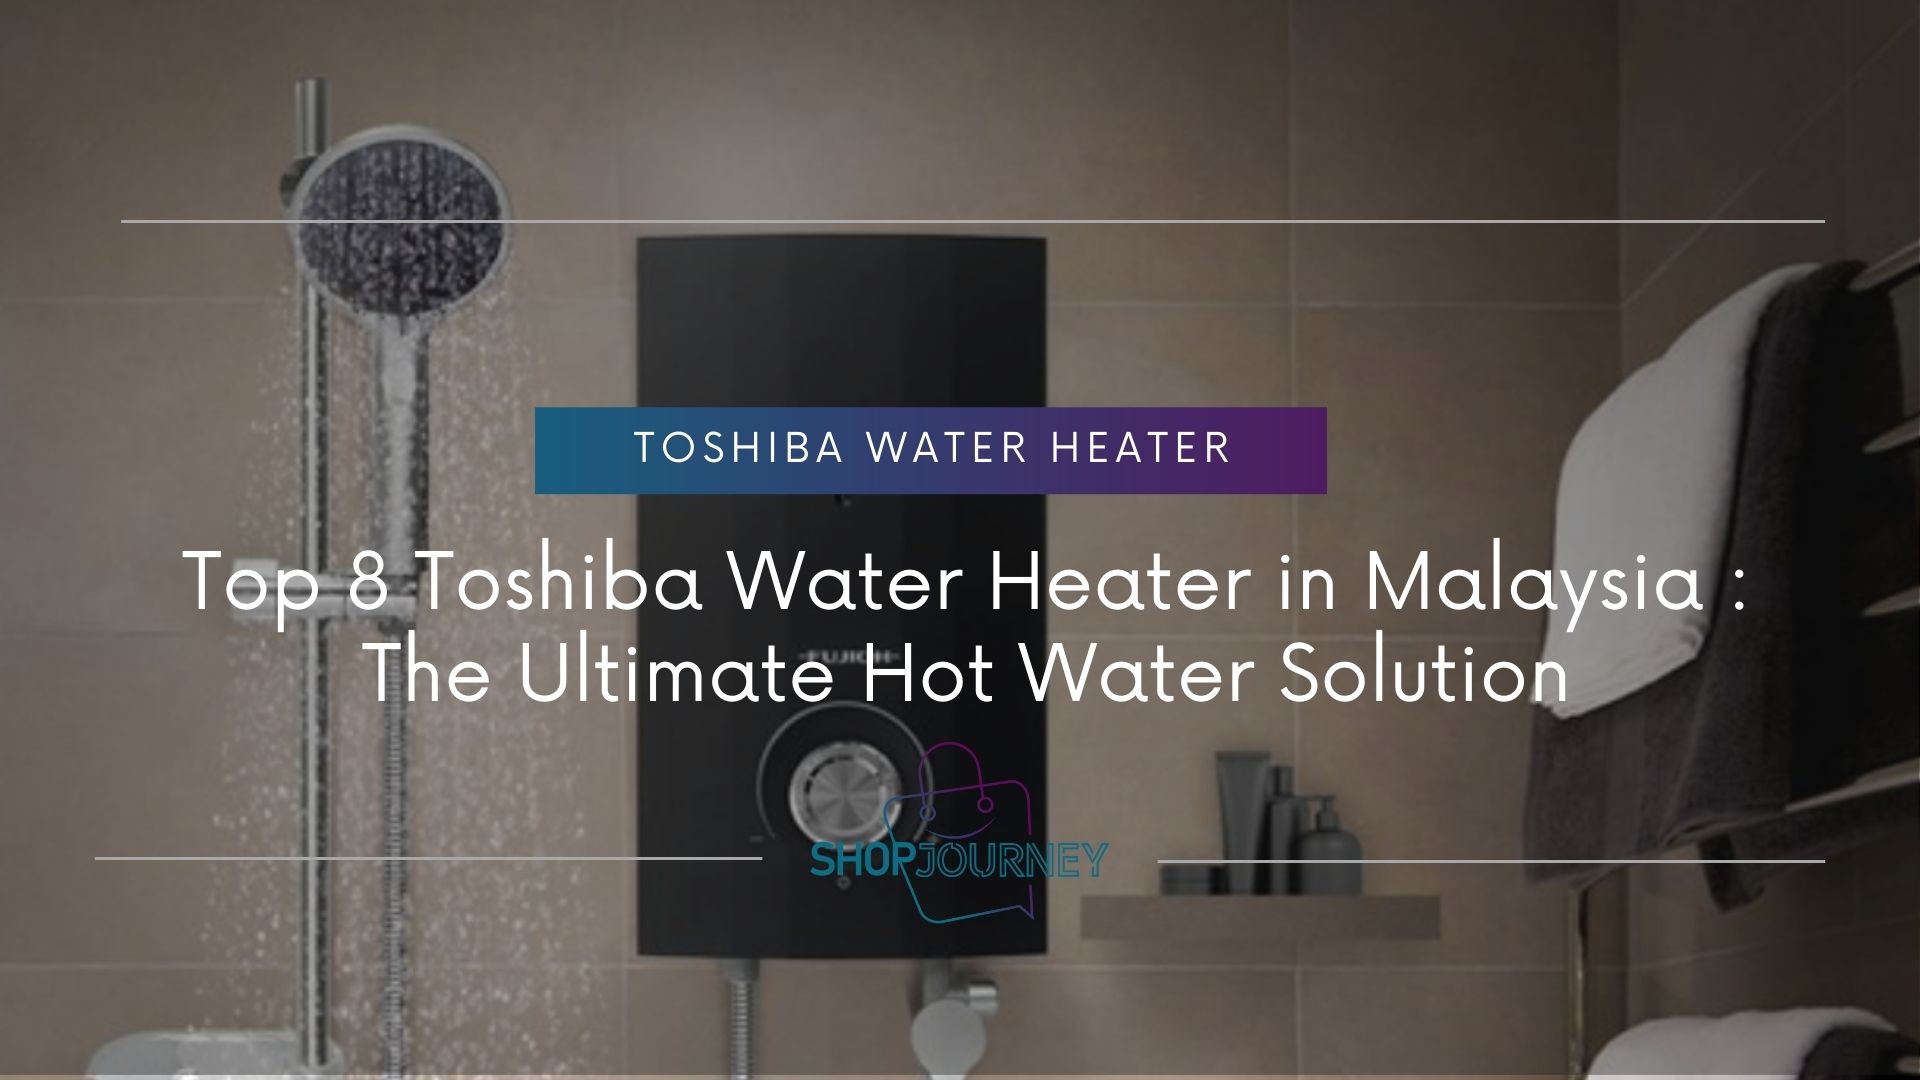 Toshiba water heater - shop journey